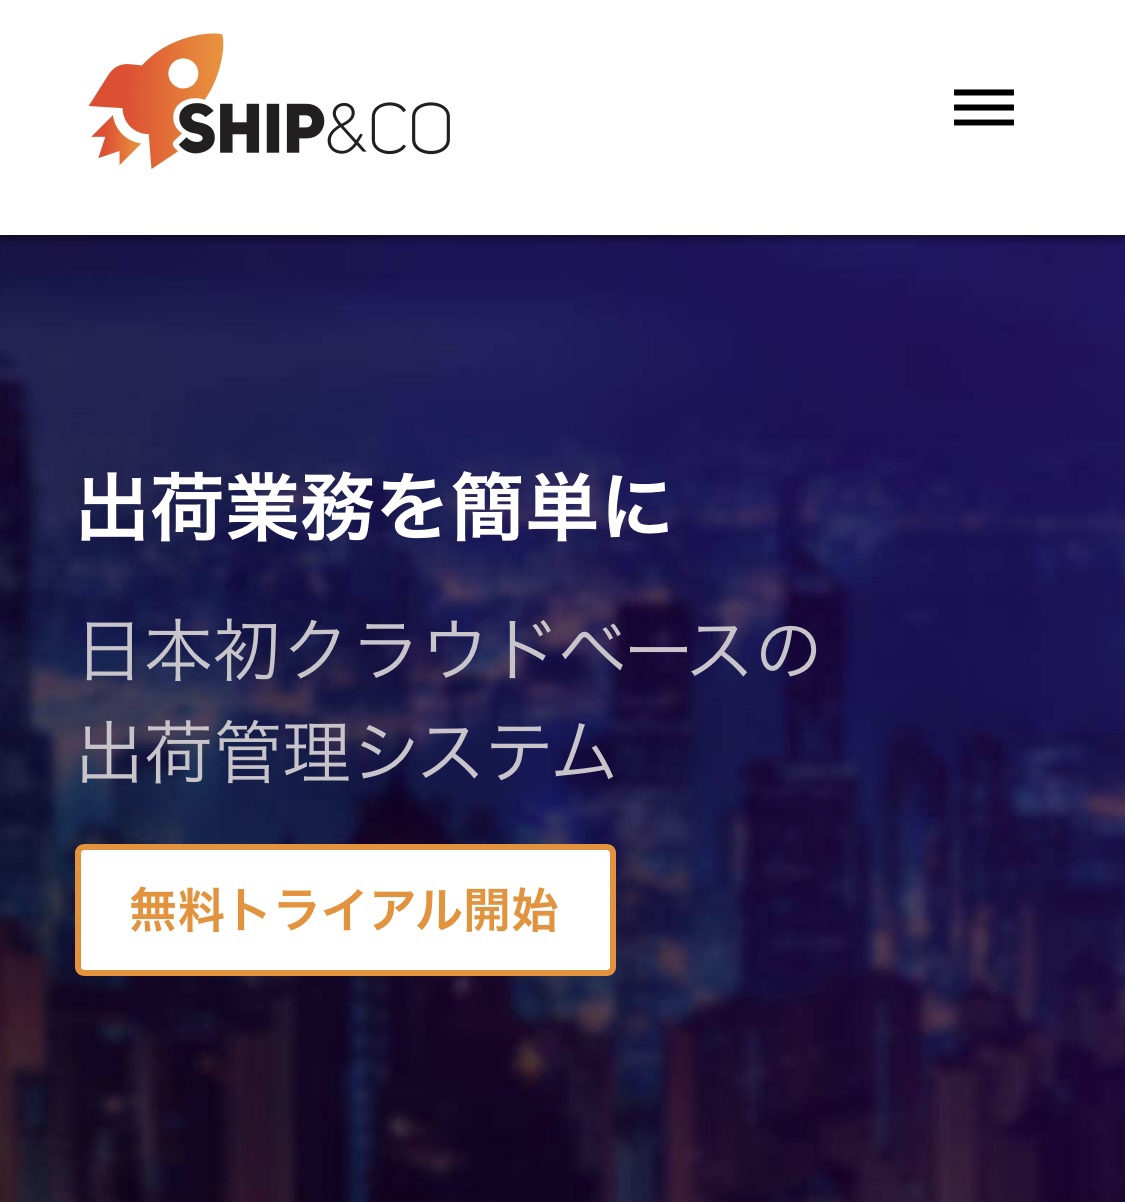 Ship & Coで複数アカウントを設定する方法